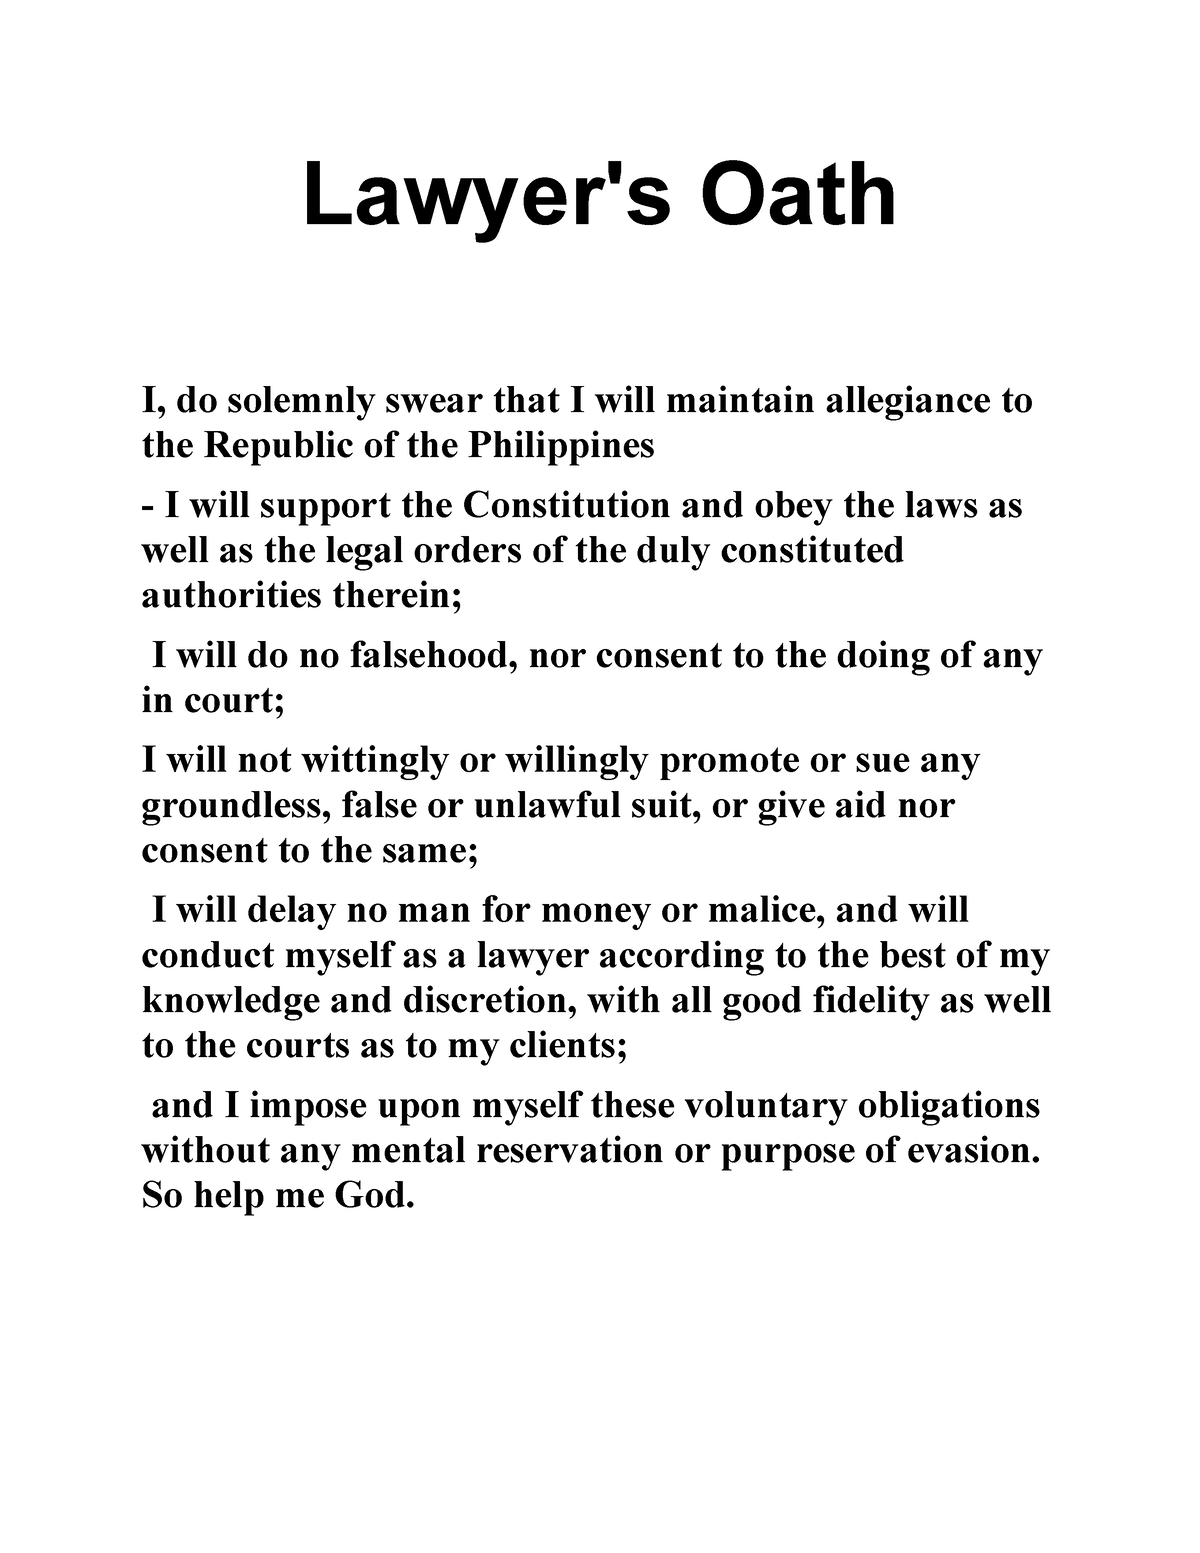 Lawyer Oath Lawyer #39 s Oath I do solemnly swear that I will maintain